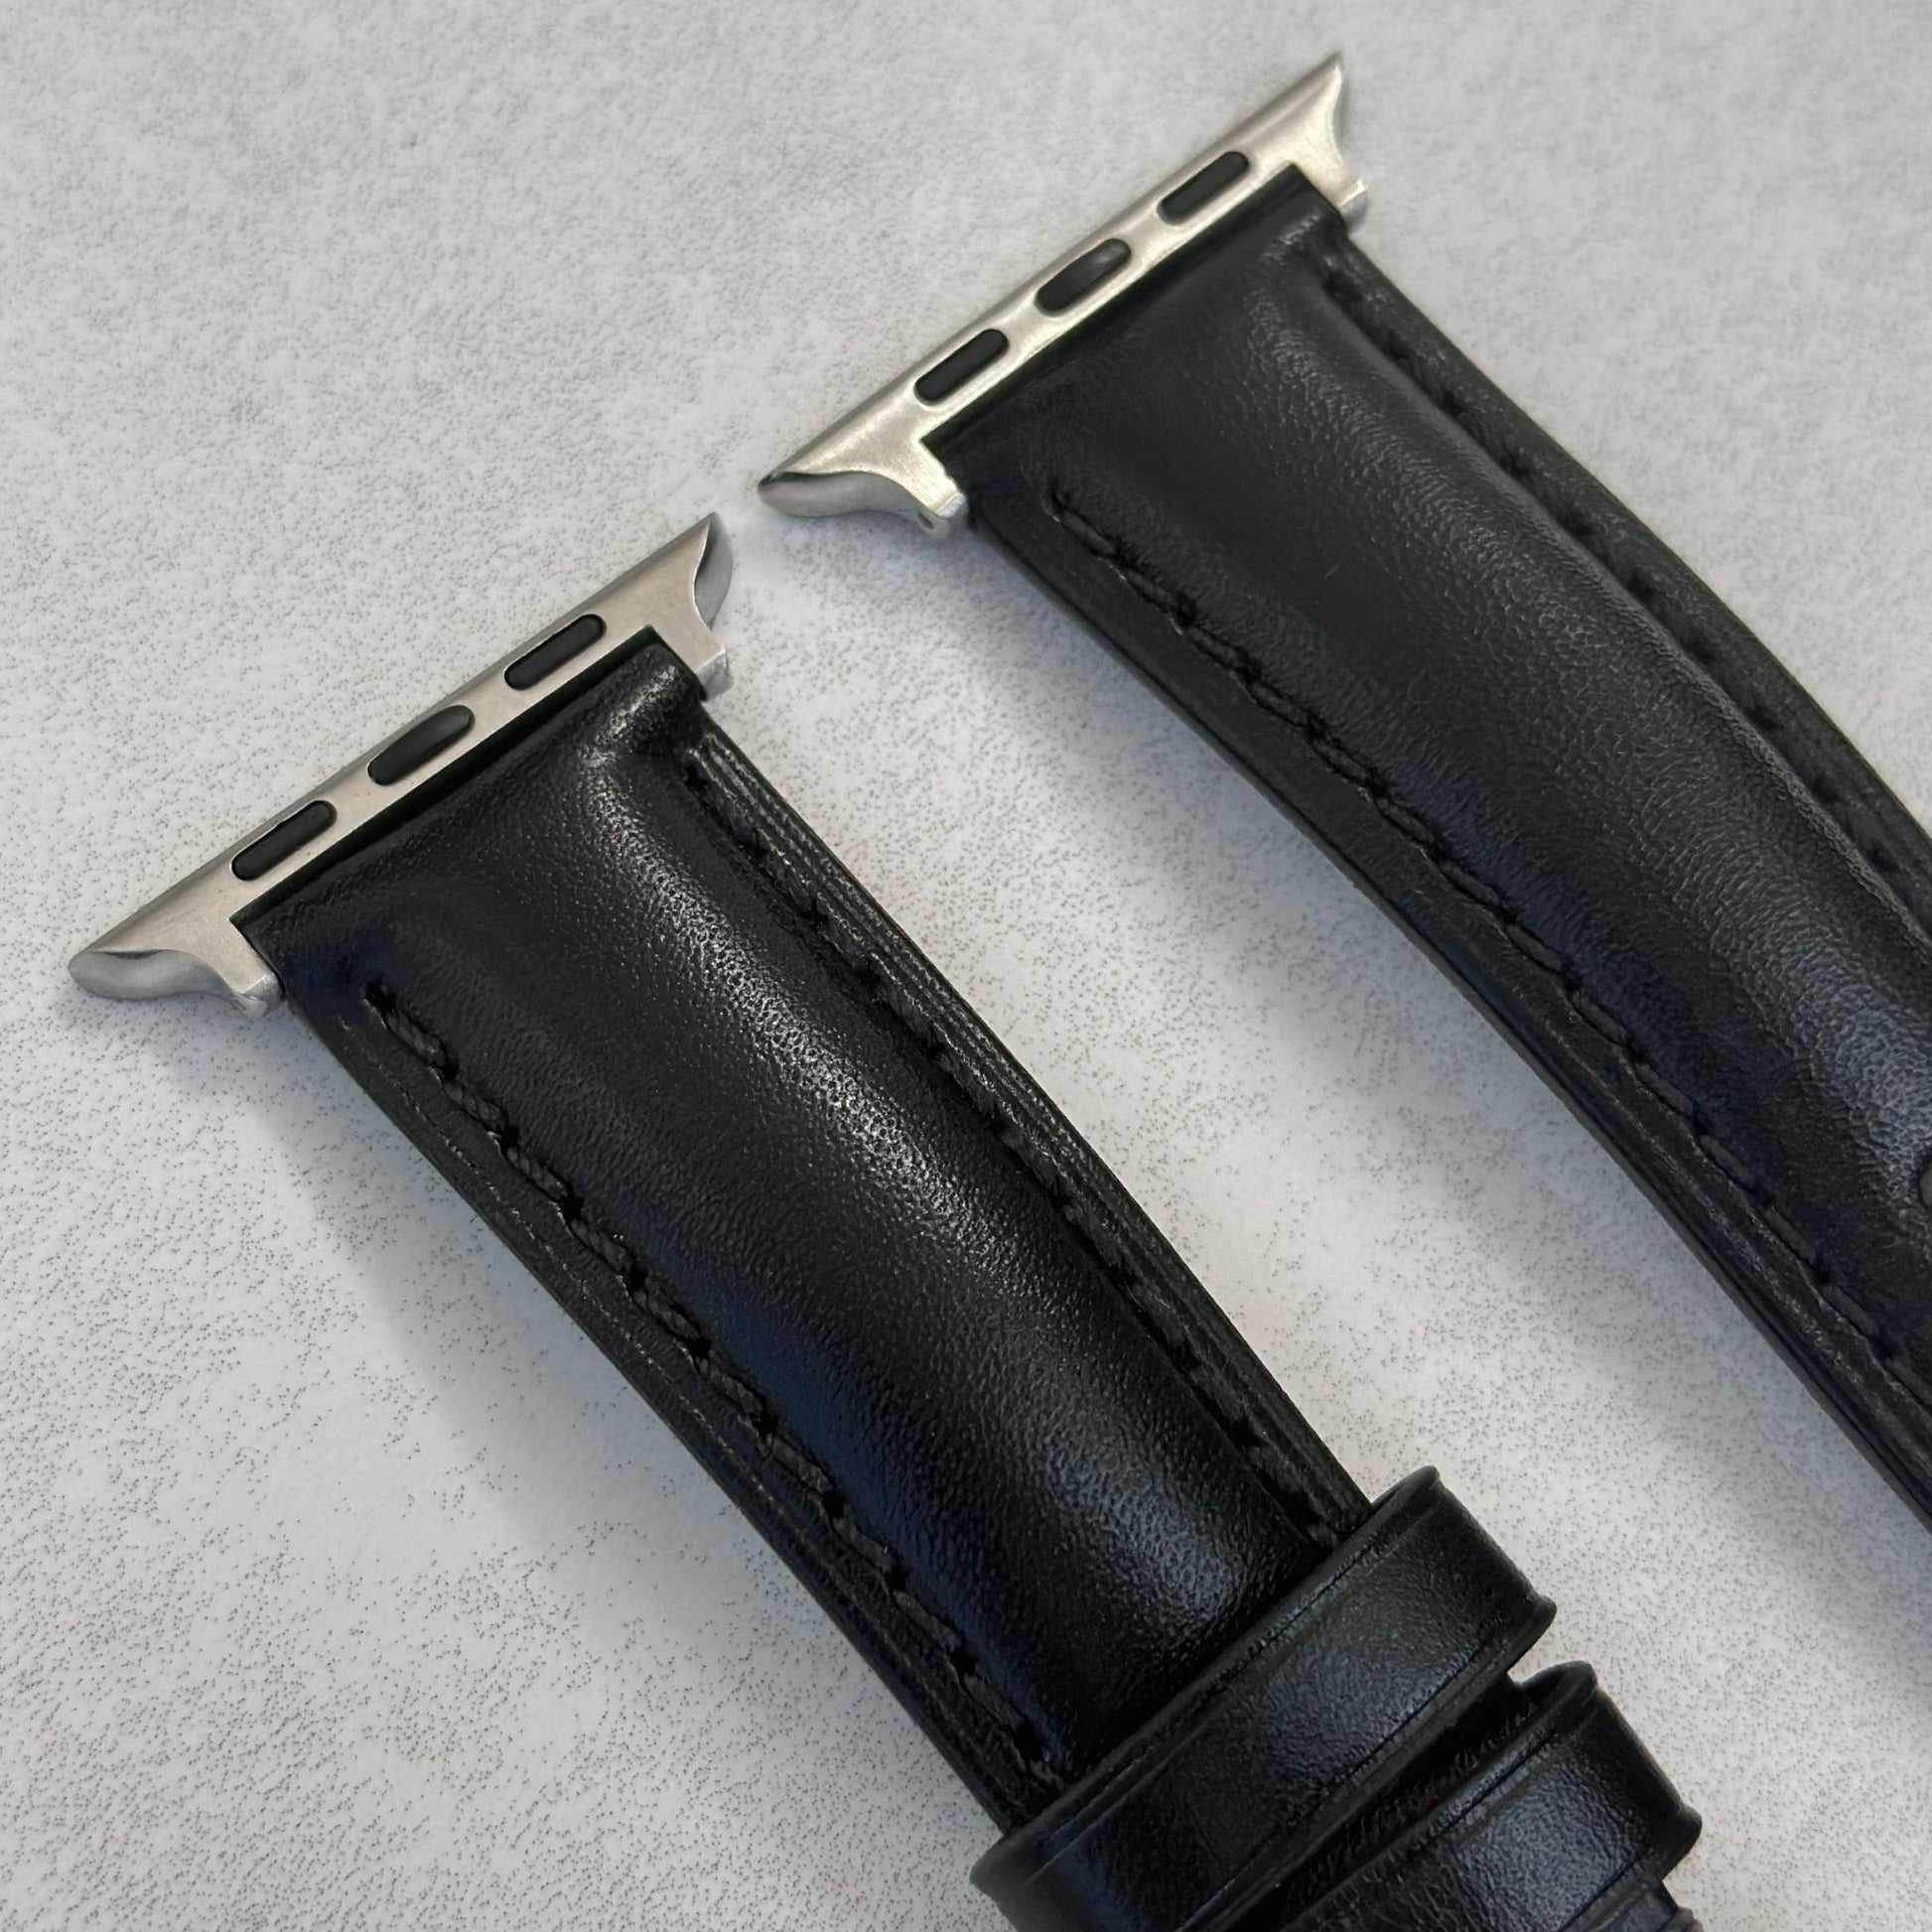 Top of the Prague jet black full grain leather watch strap. Padded leather watch strap. Watch And Strap.